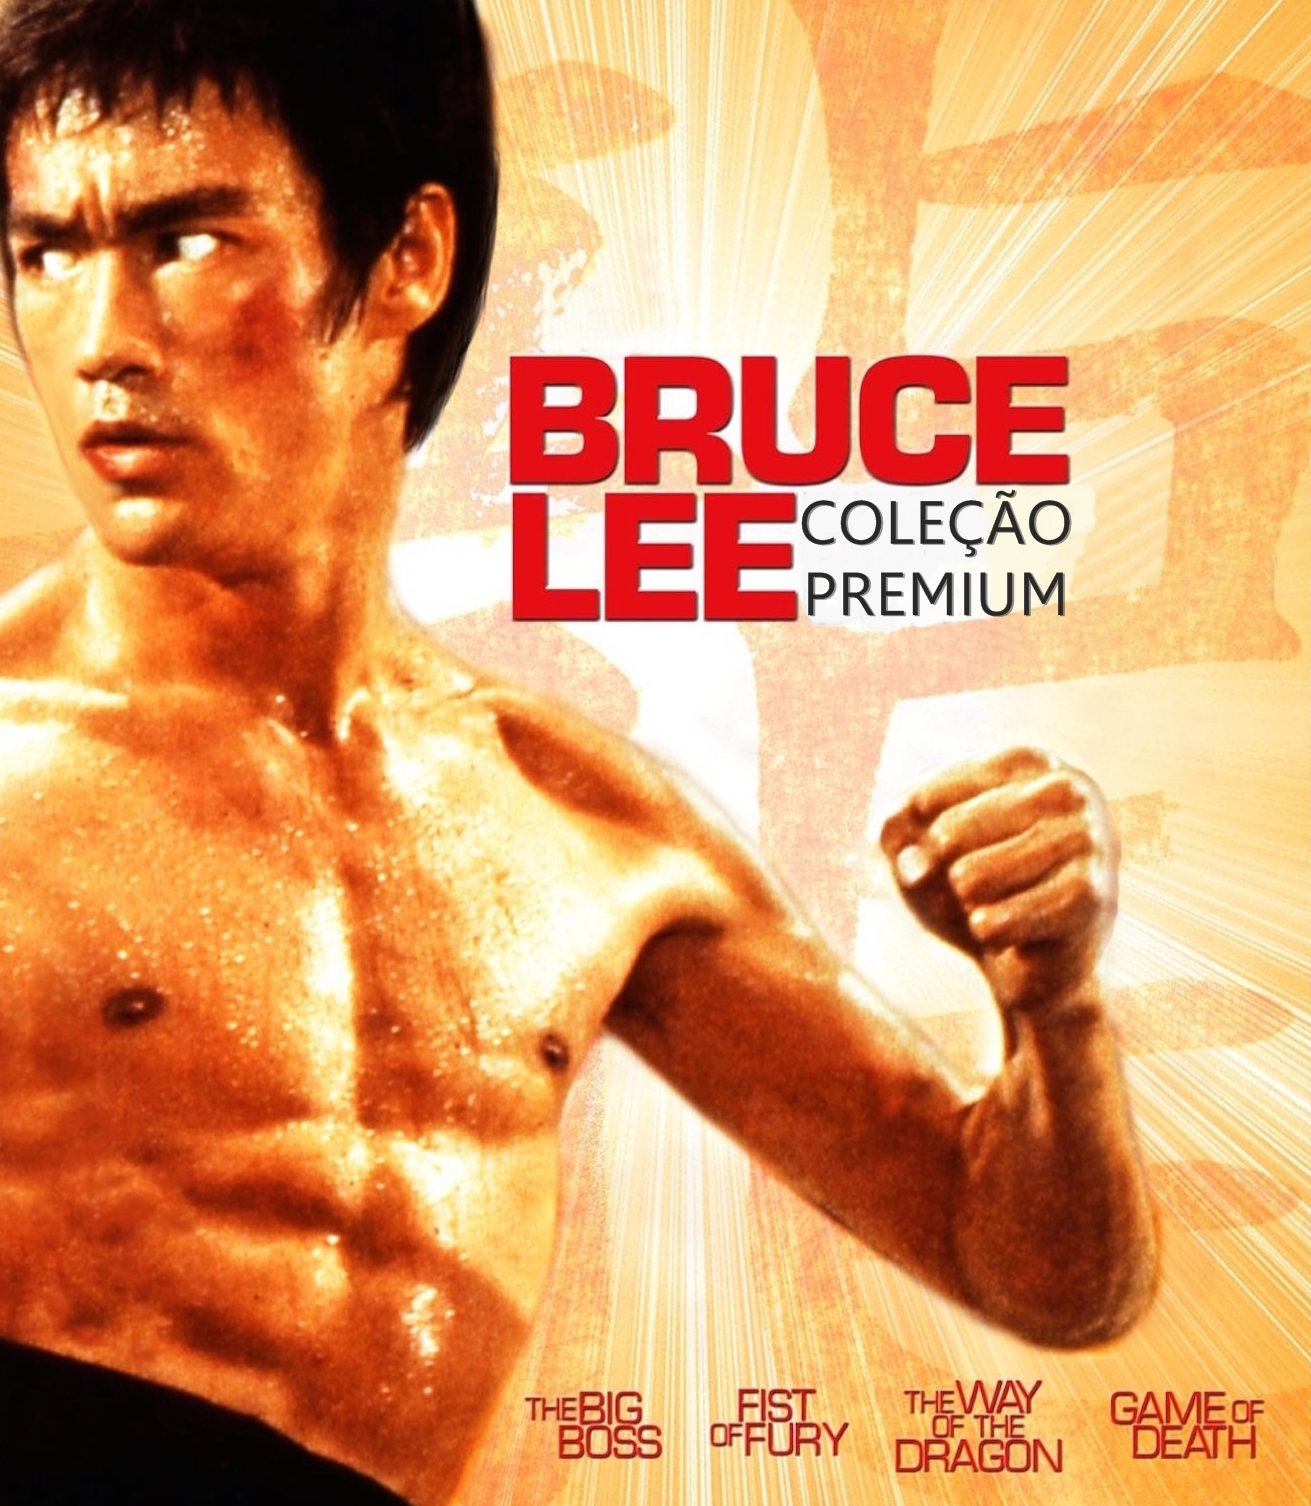 Bruce Lee Coleção Premium (1971 – 1981) – HD 720p Dual Áudio